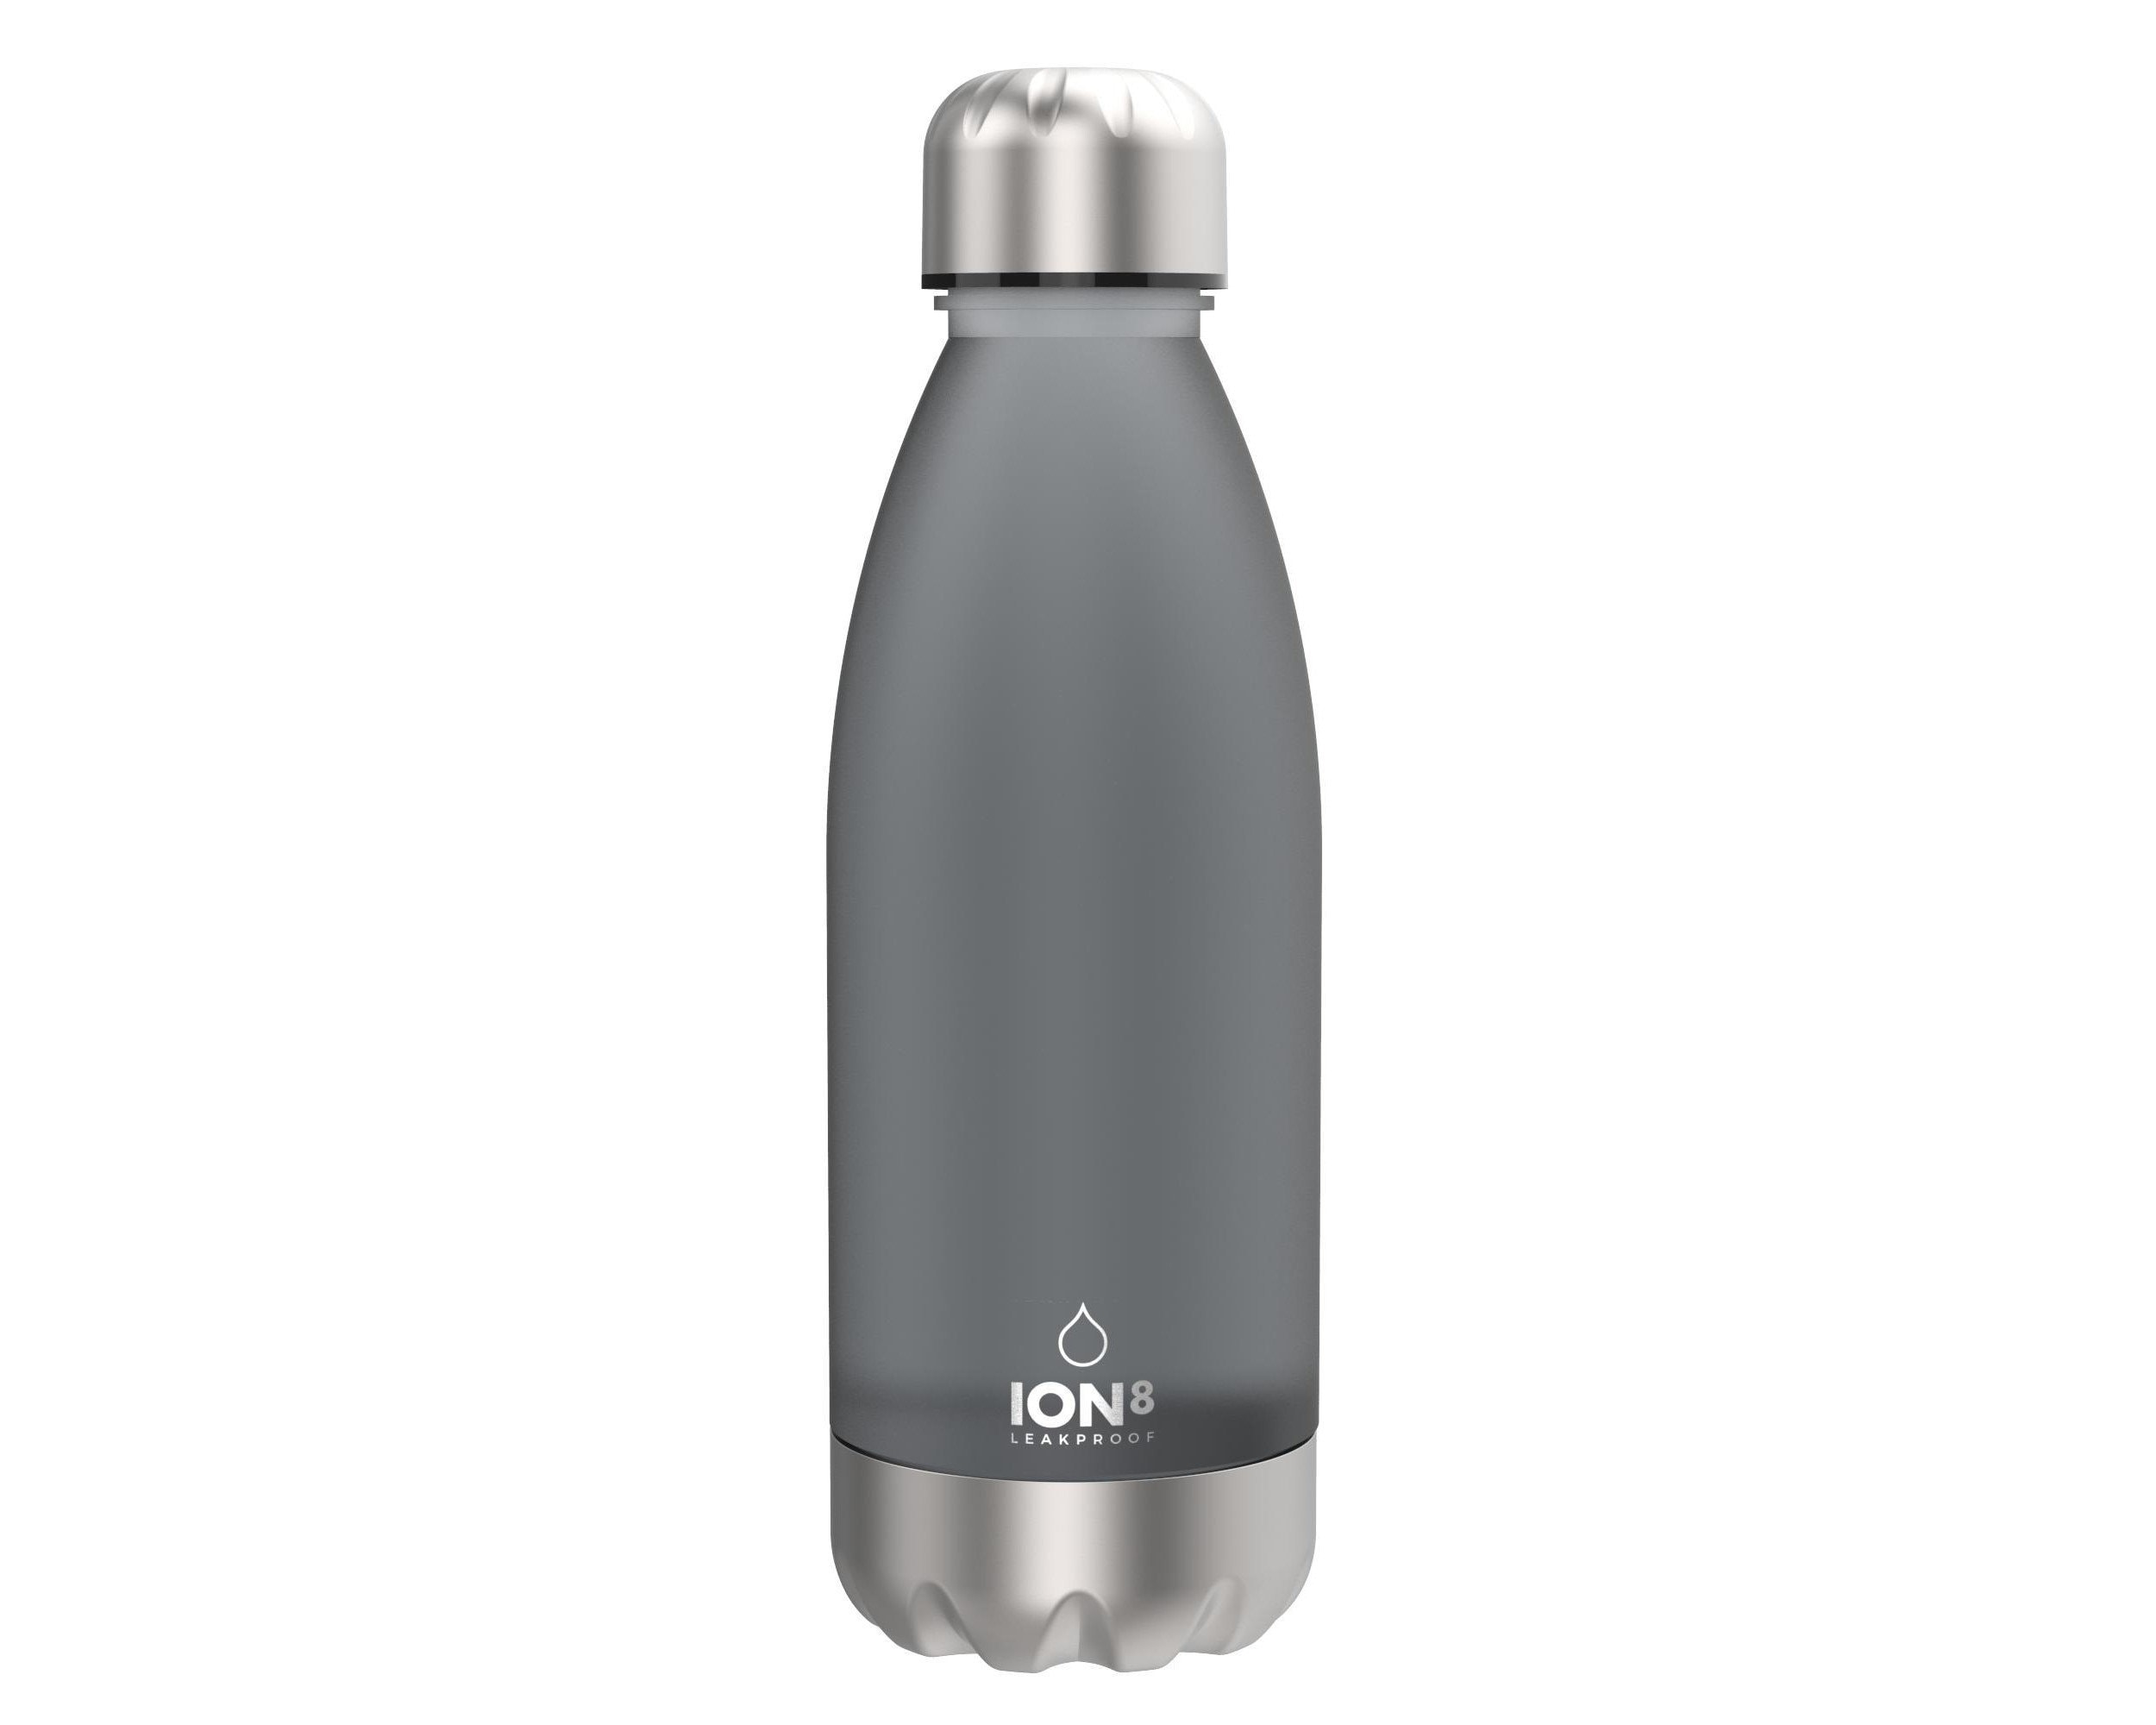 Ion8 Leak Proof Water Bottle - Review